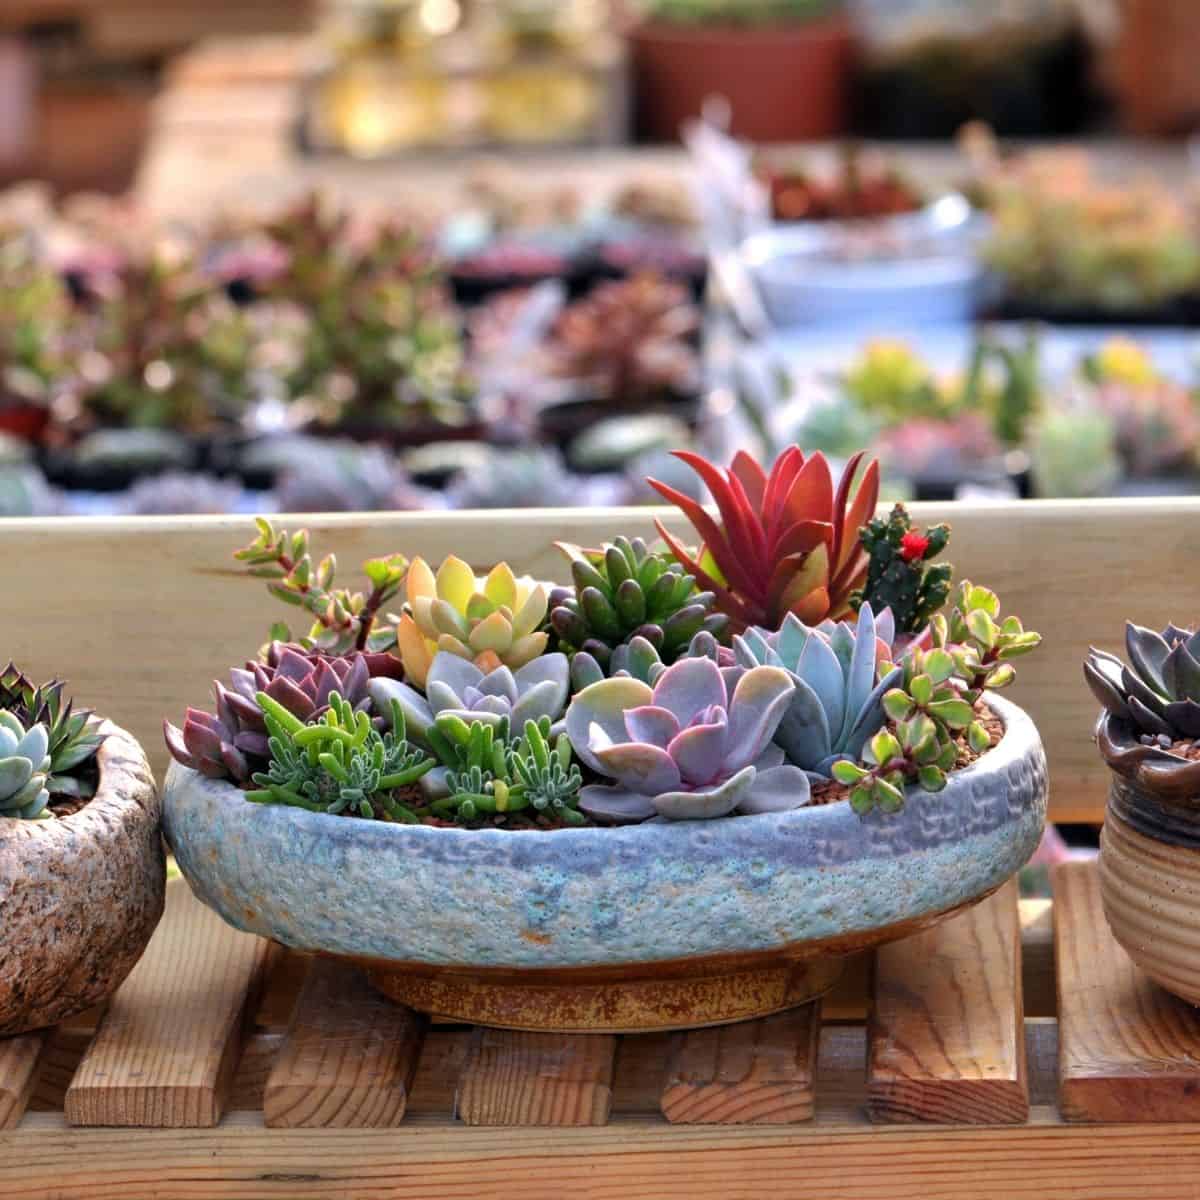 3.2 inch Ceramic Succulent Planter Pots Flower Pot With Drainage Hole Set Of 4 